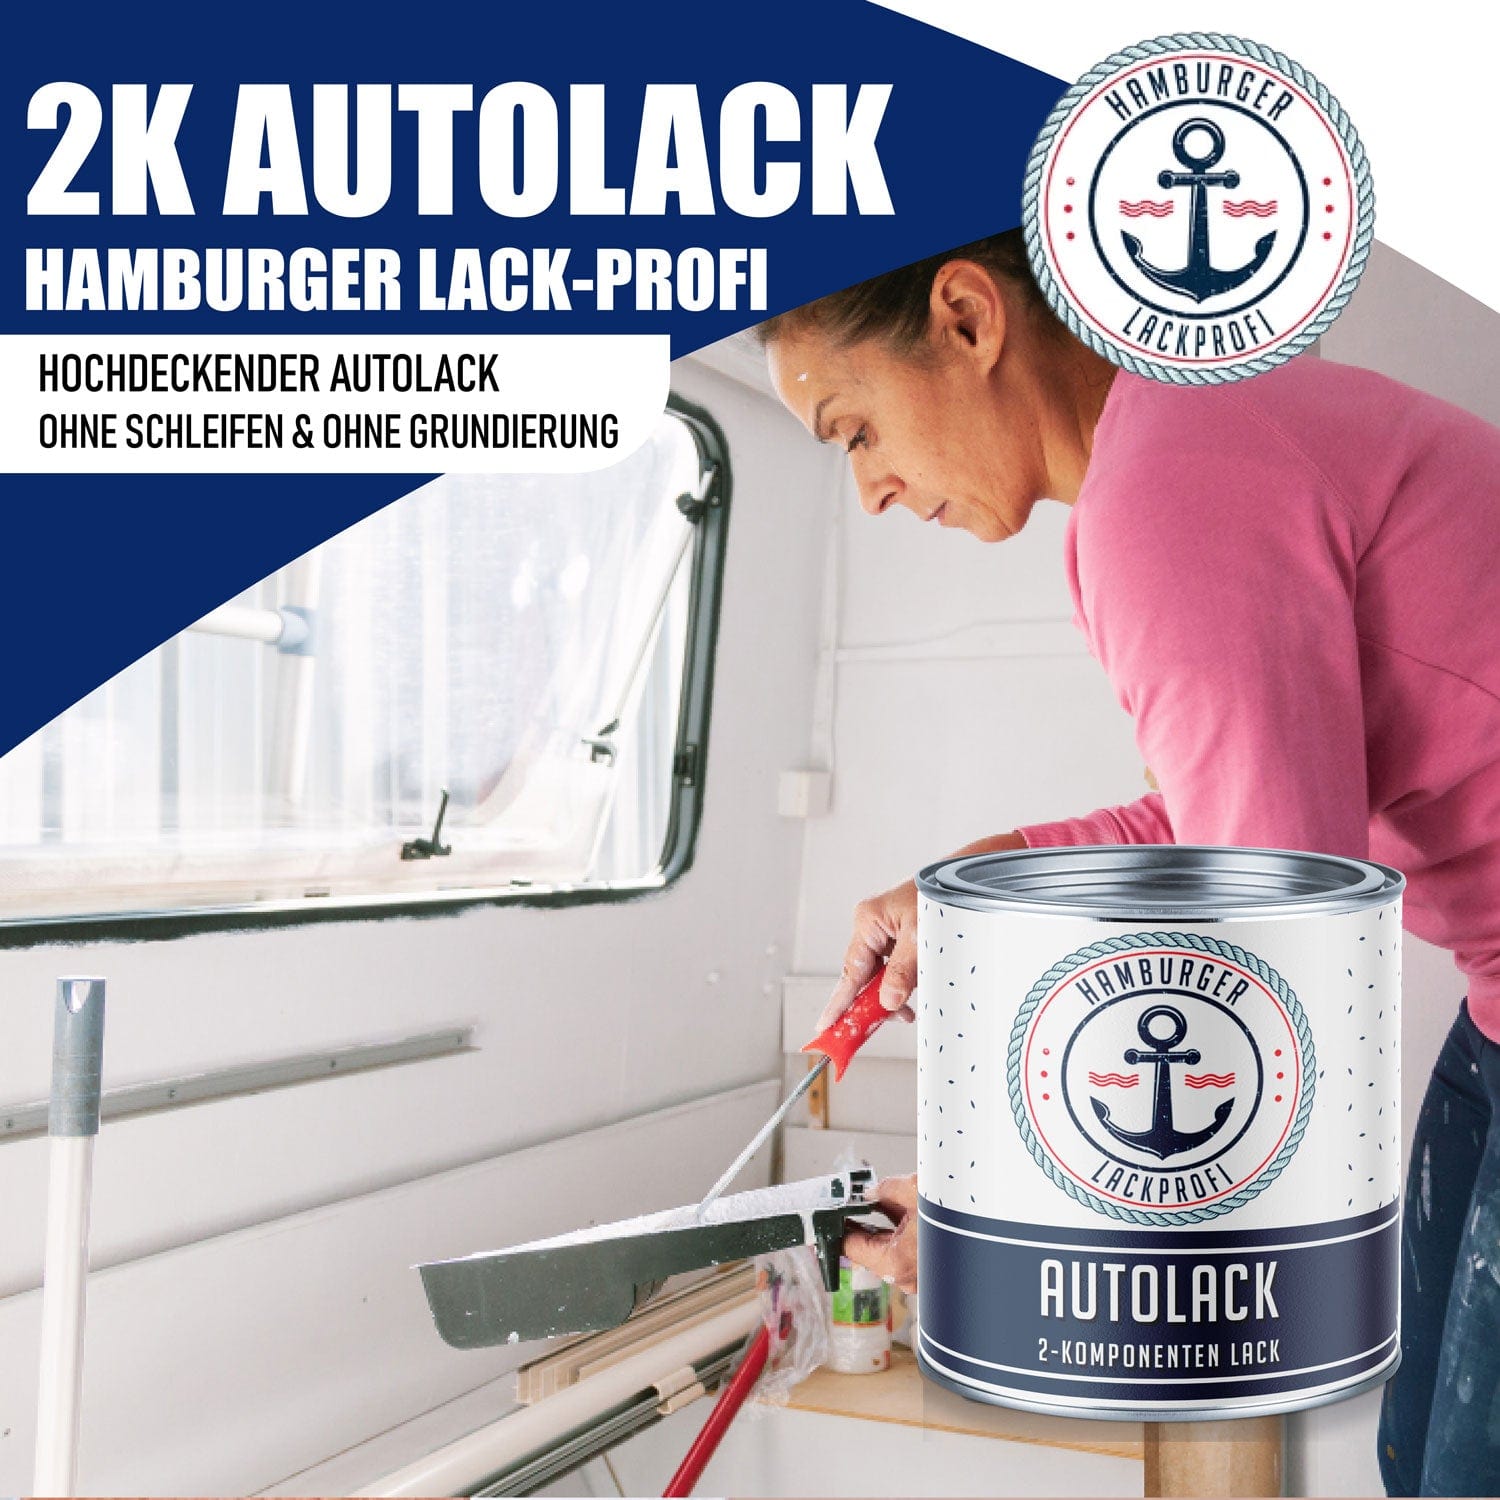 Hamburger Lack-Profi Lacke & Beschichtungen Hamburger Lack-Profi 2K Autolack in Signalviolett RAL 4008 mit Lackierset (X300) & Verdünnung (1 L) - 30% Sparangebot